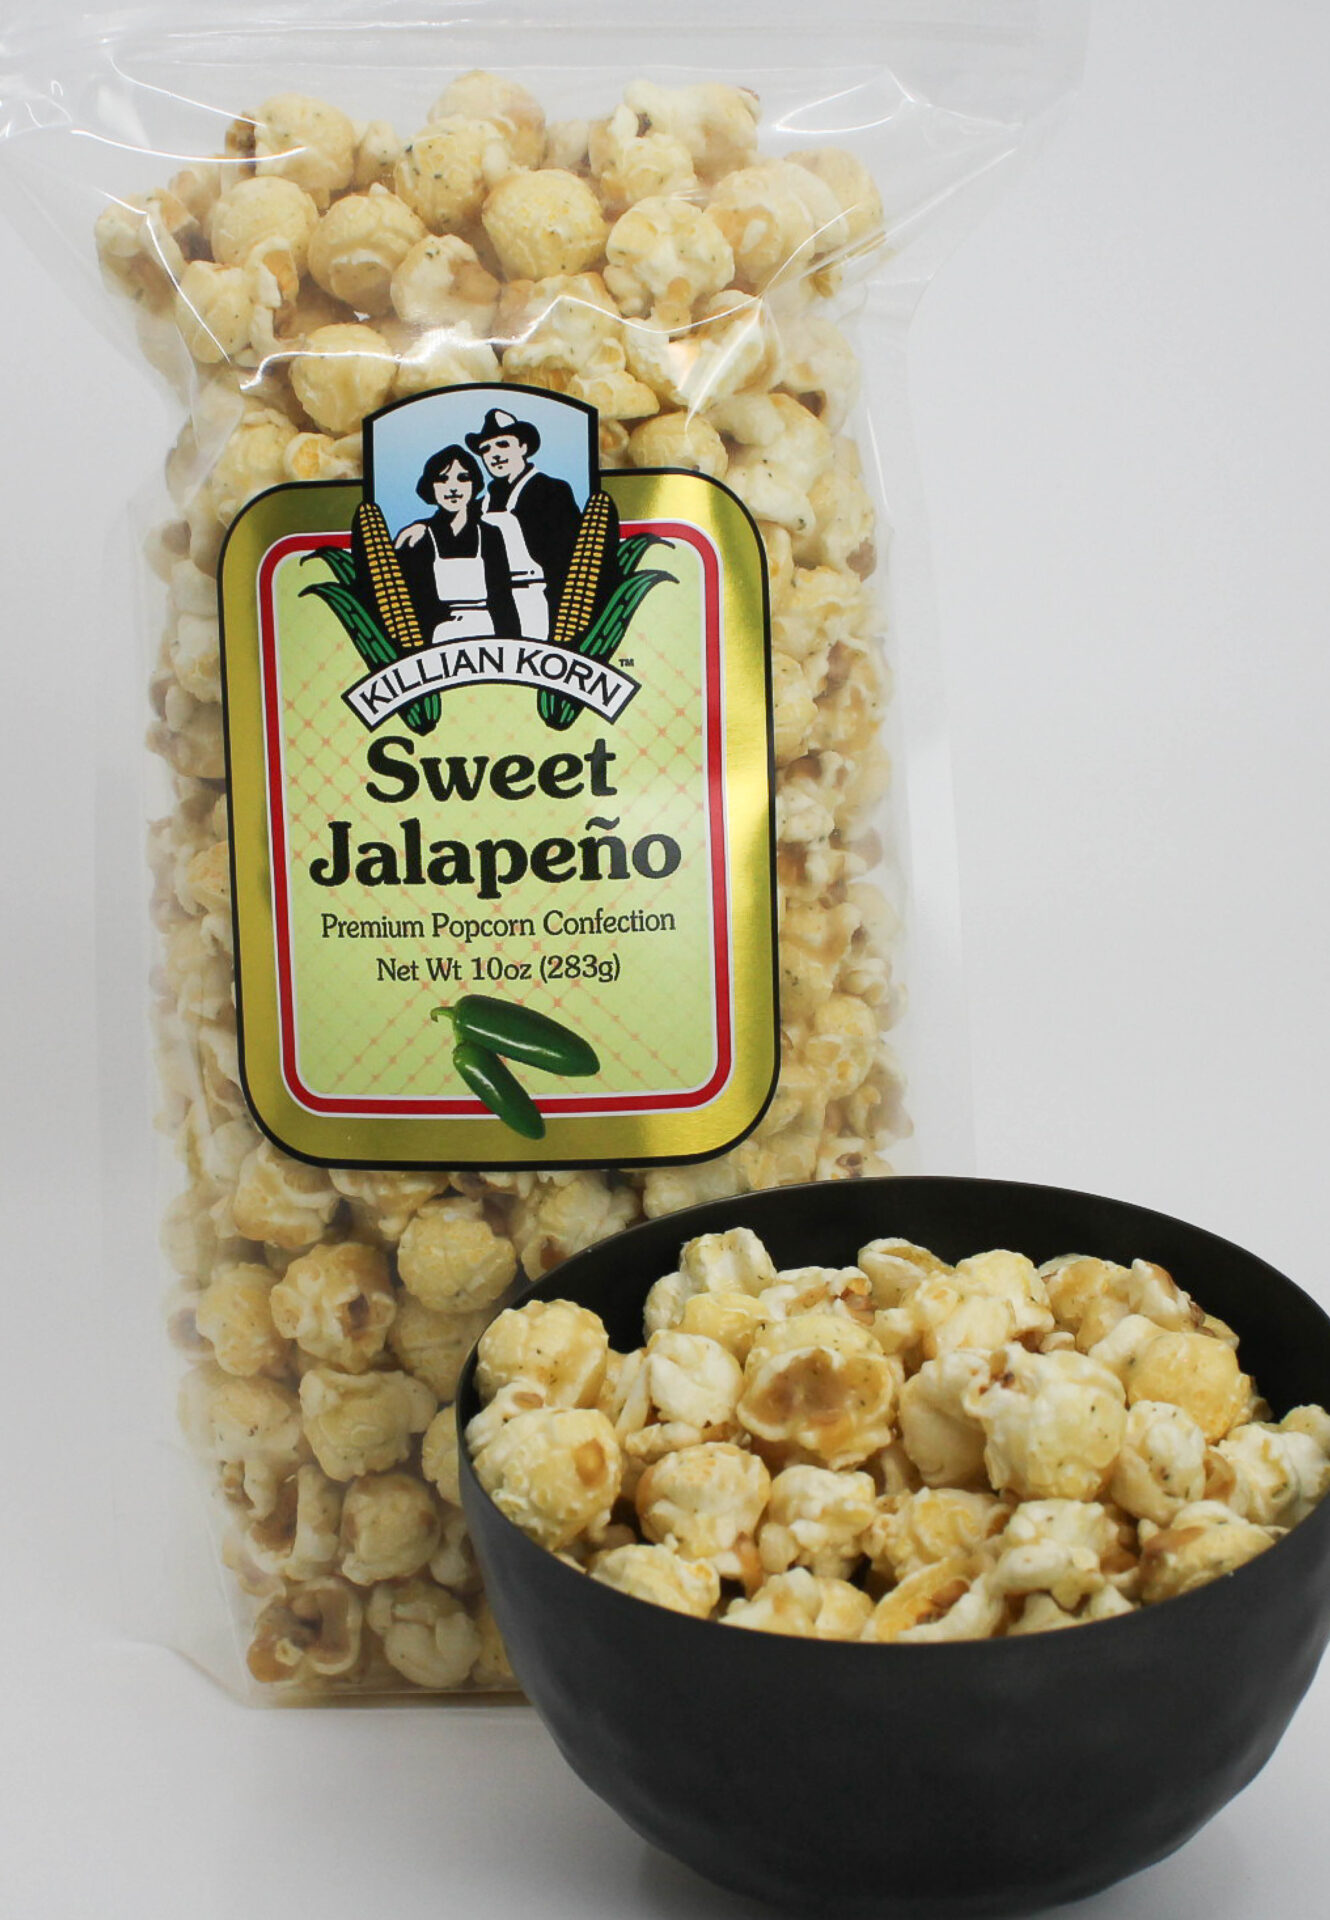 Sweet Jalapeno Flavored Popcorn